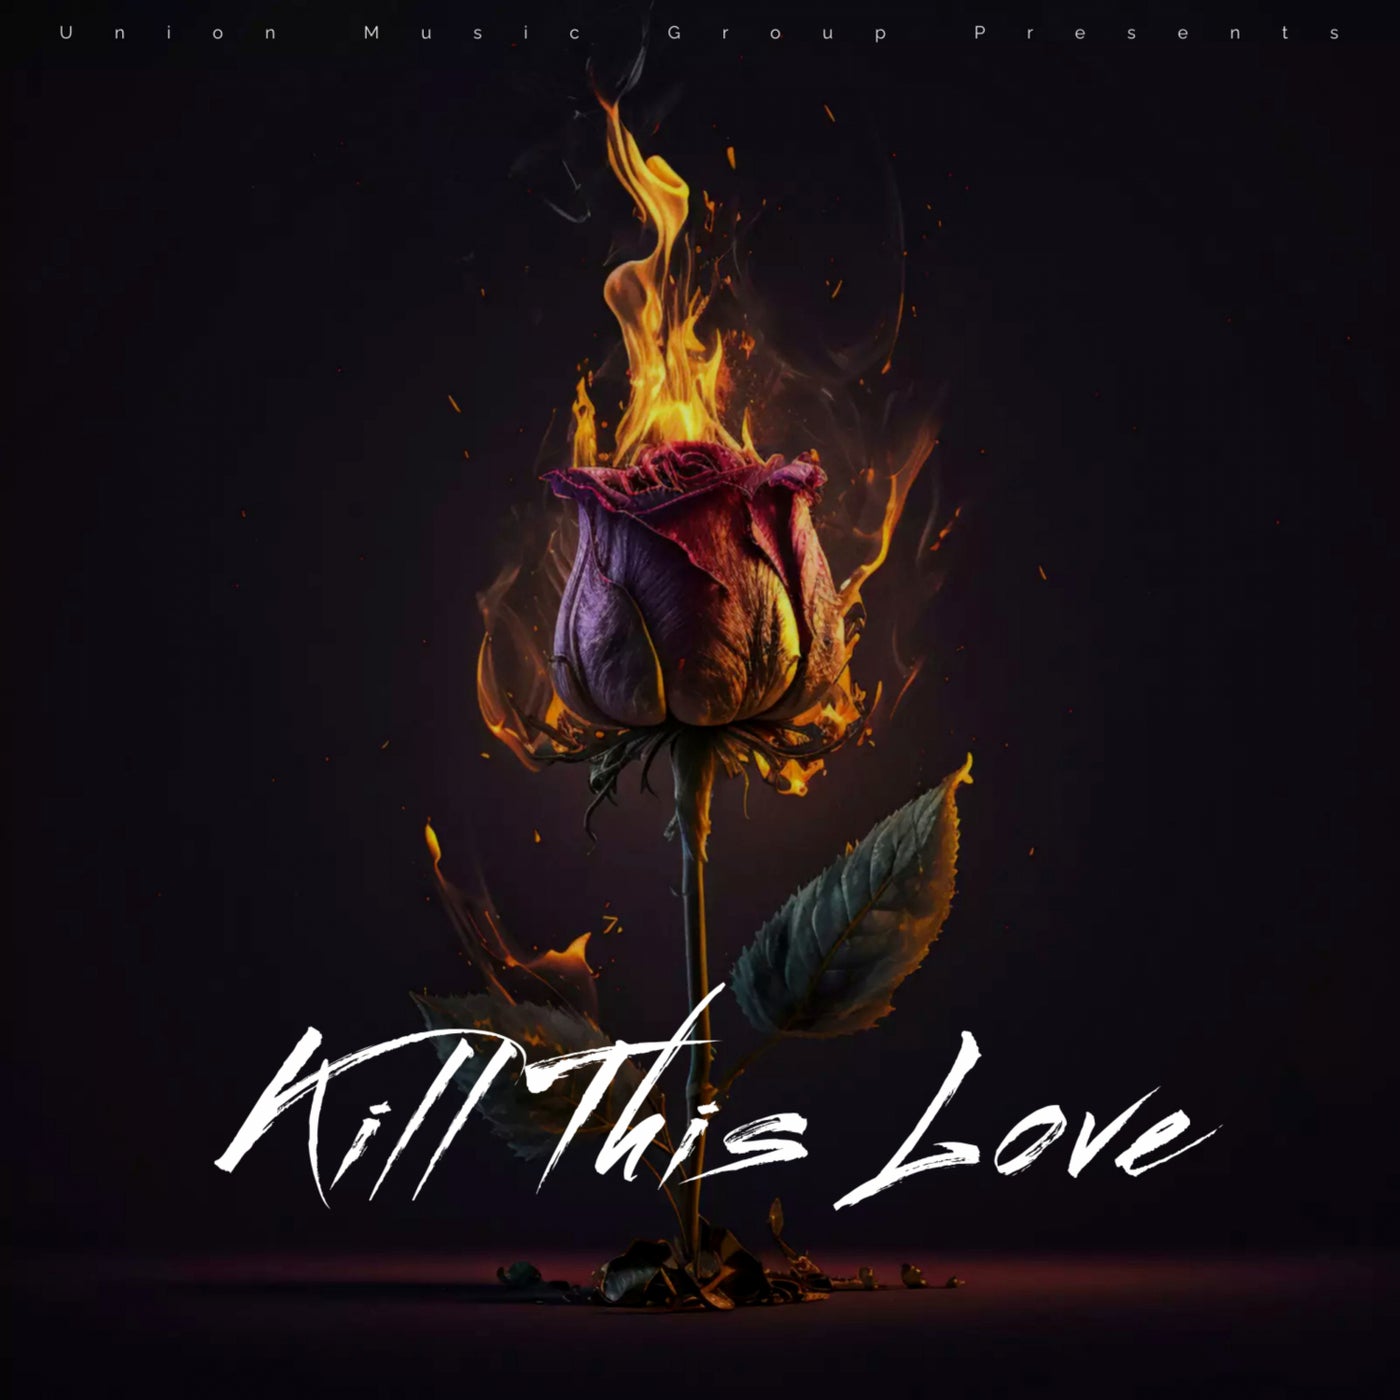 Kill This Love